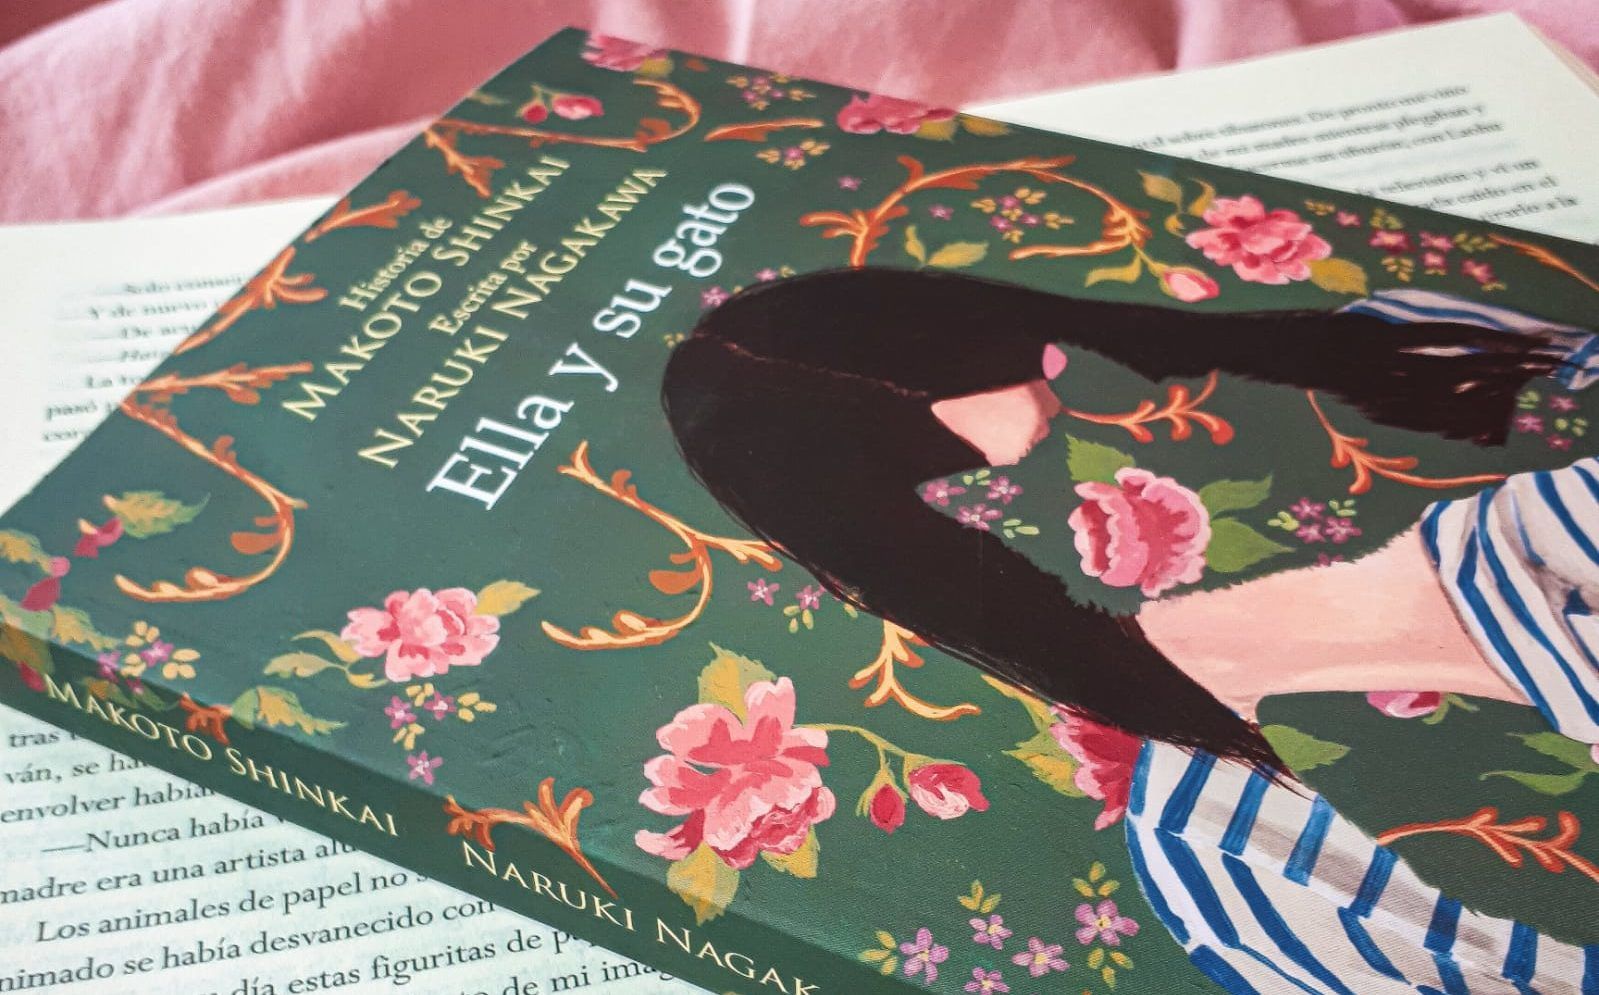 “Ella y su gato”: El animador Makoto Shinkai pasa del anime a la literatura